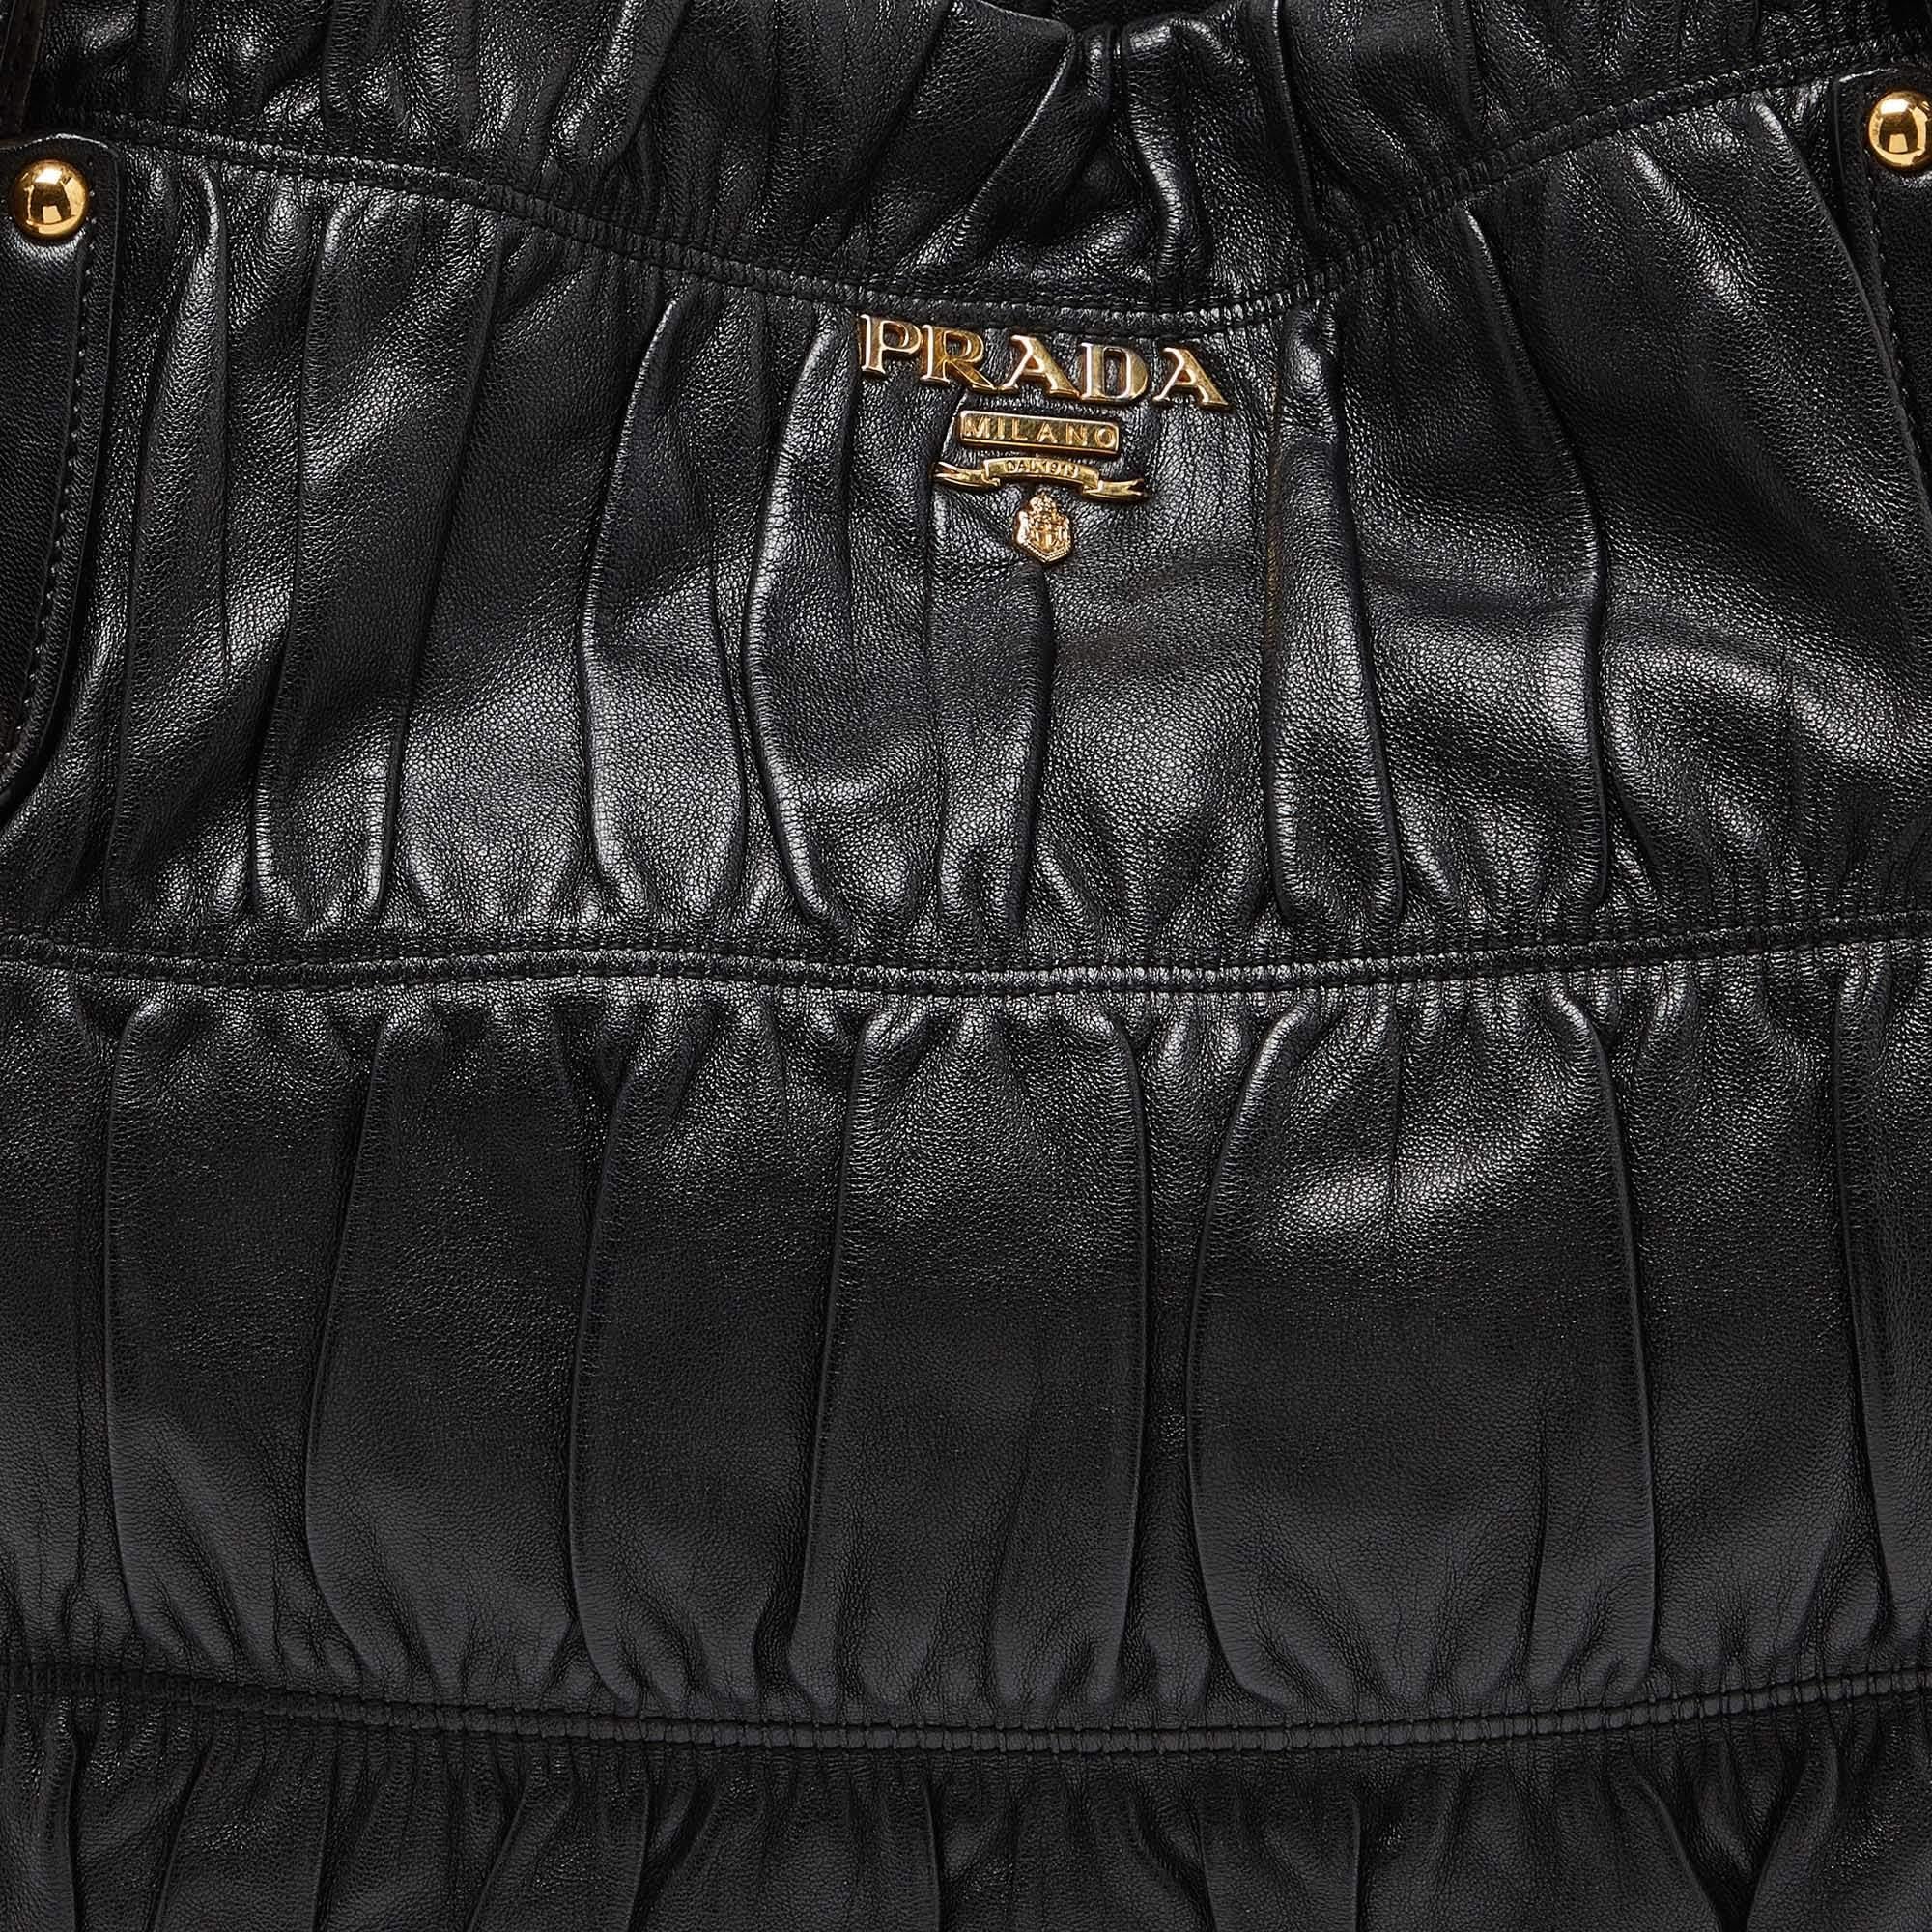 Prada Black Nappa Gaufre Leather Tote For Sale 4